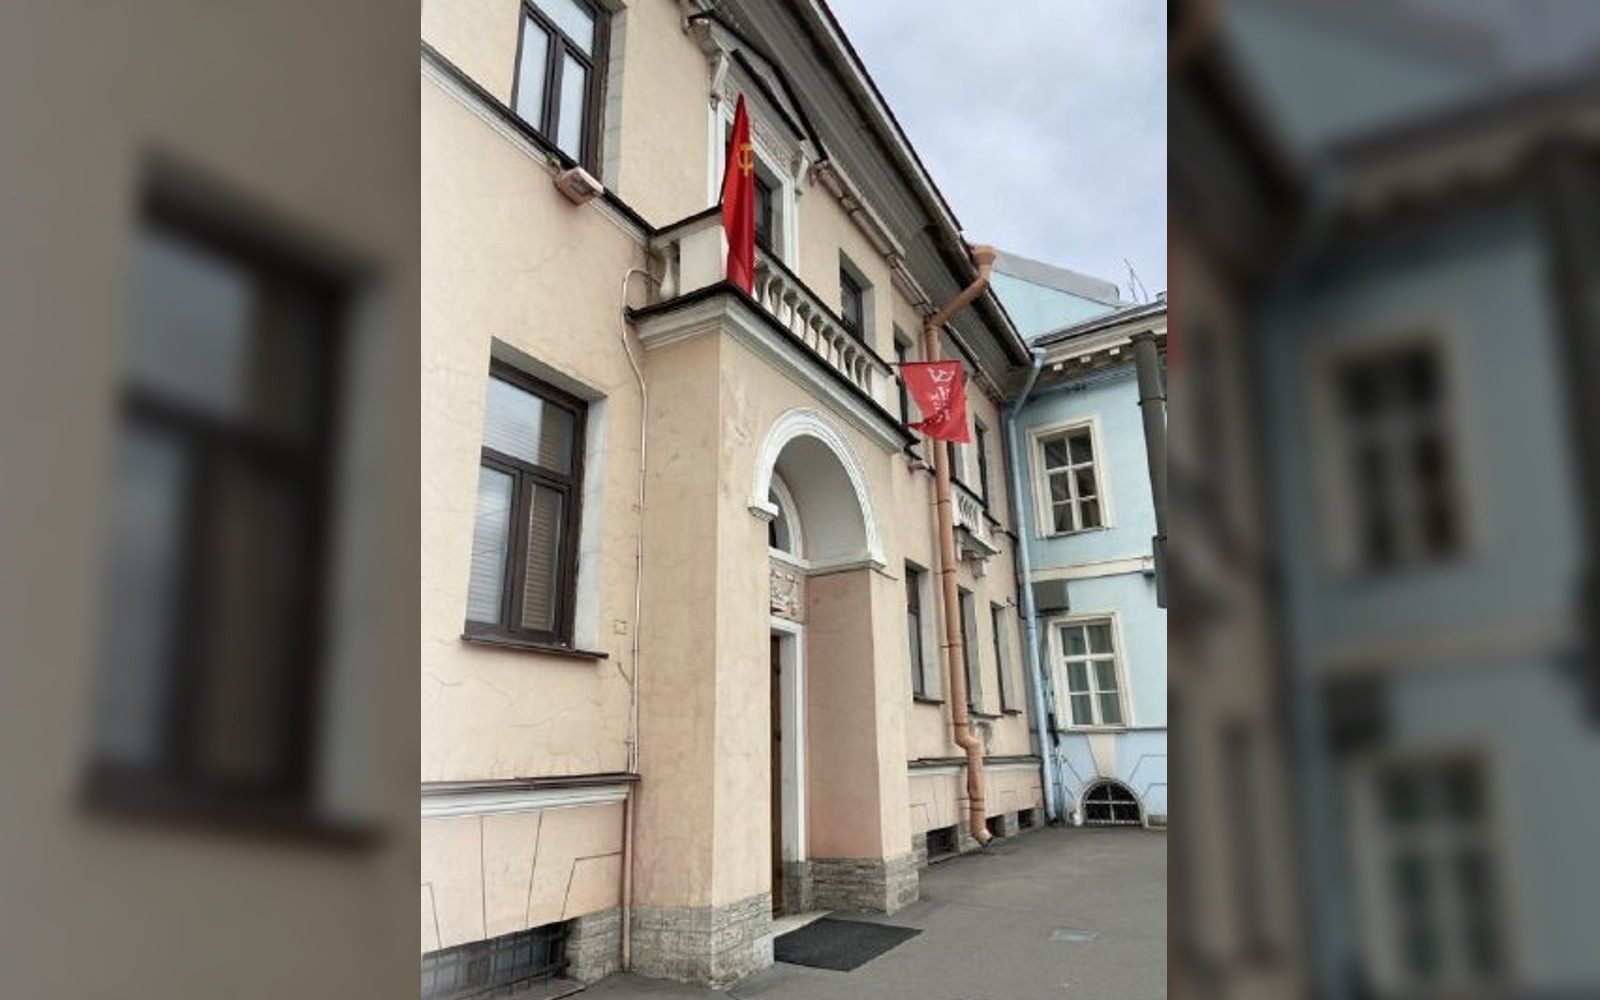 Над входом в офис бизнесмена Евгения Пригожина появились знамена СССР